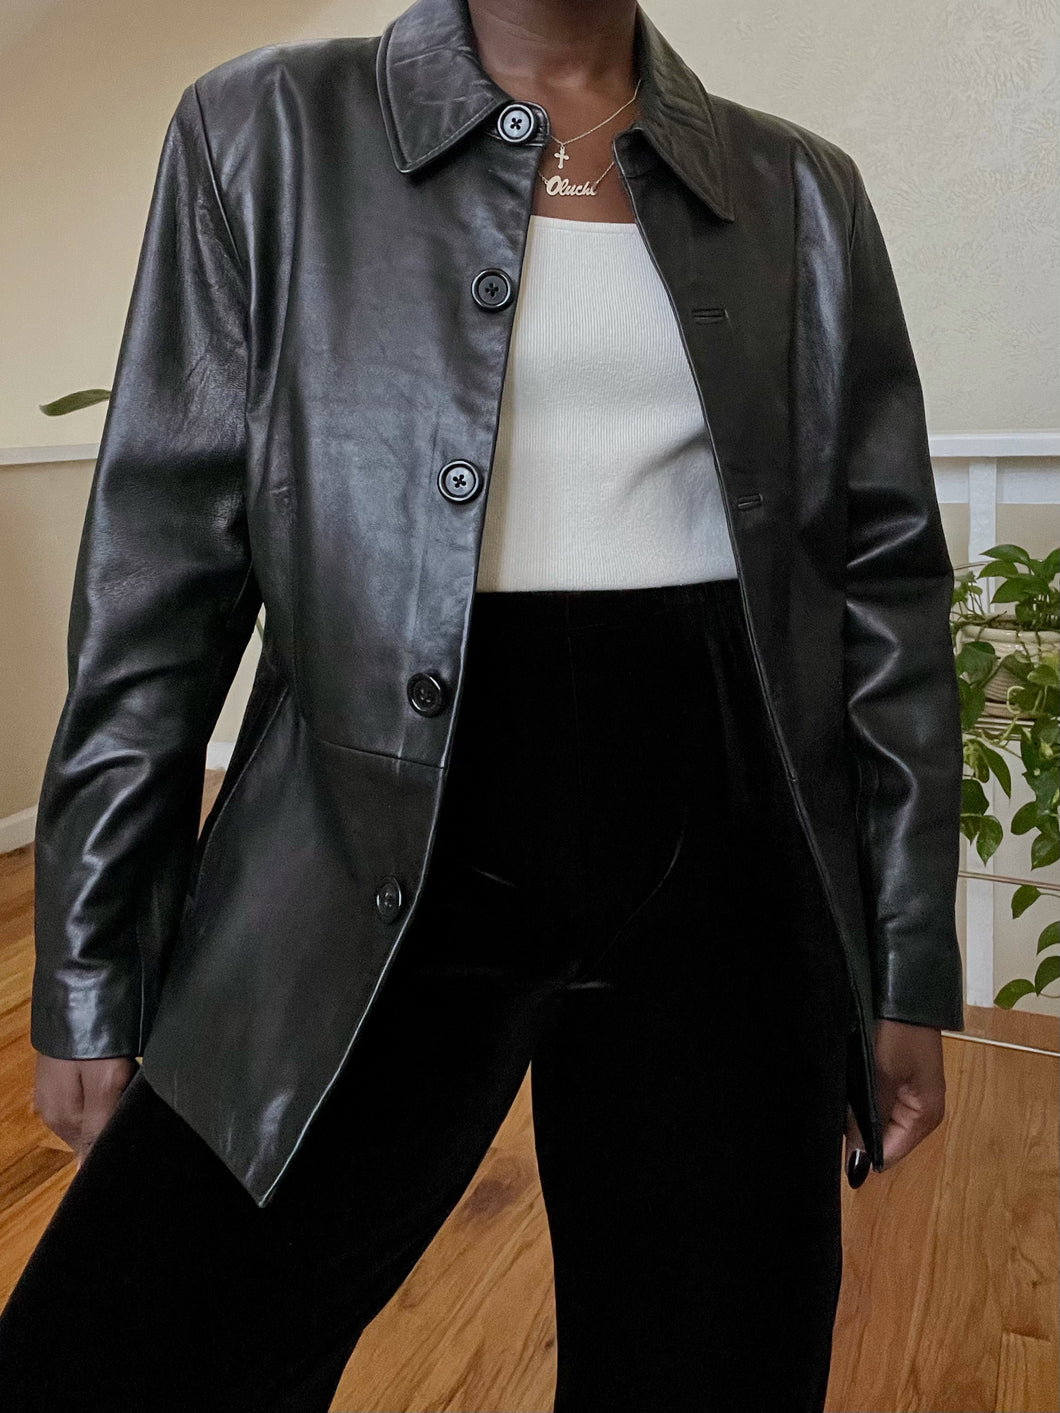 slim fit black leather jacket